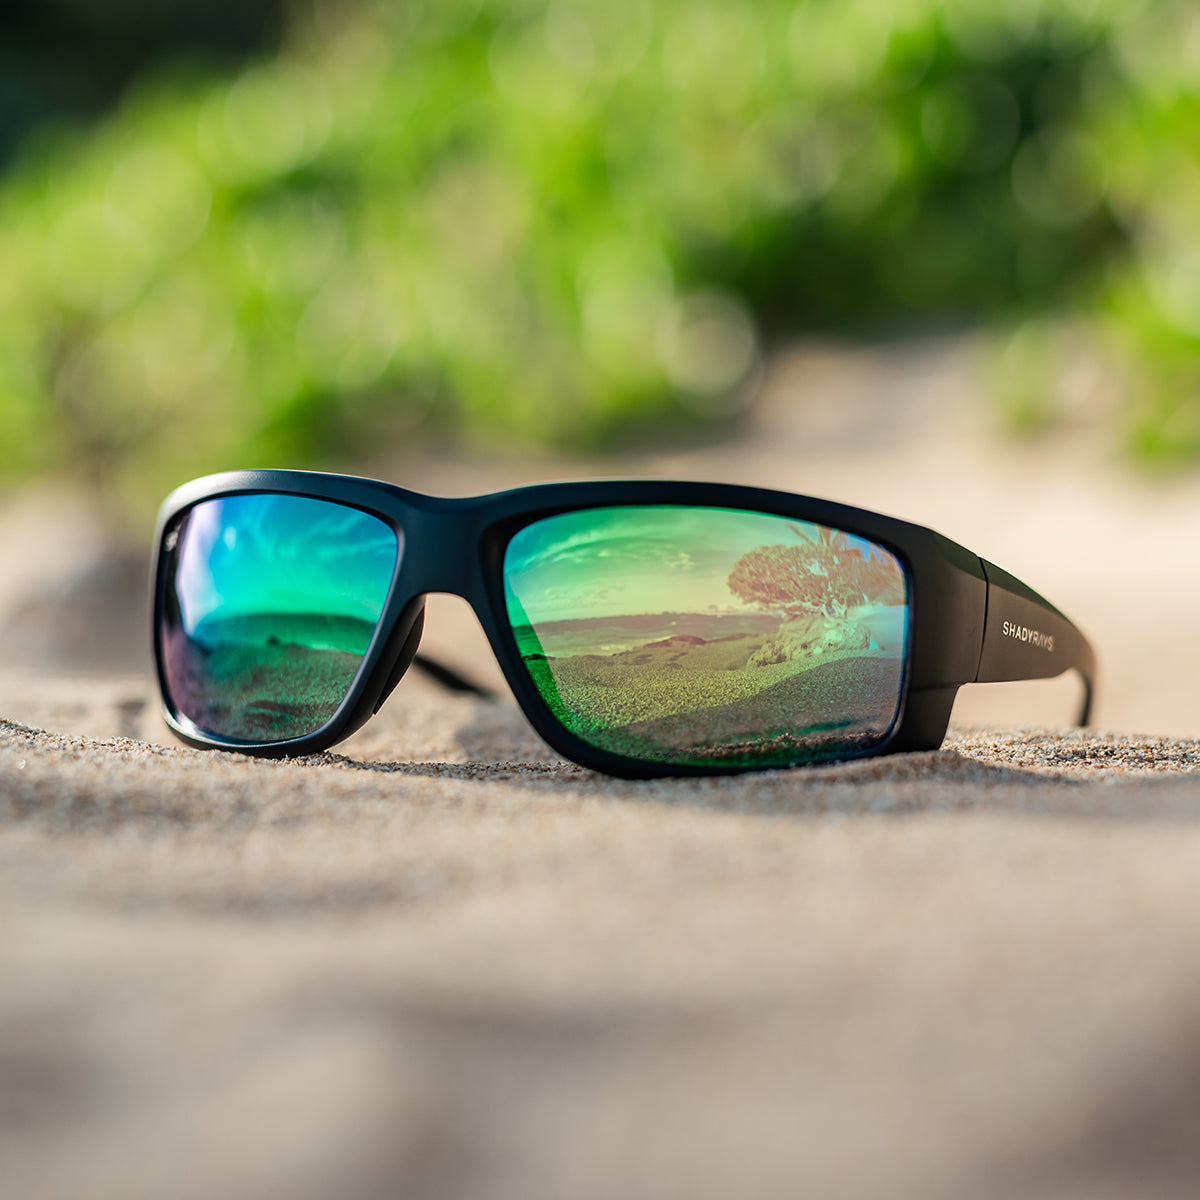 Shady Rays Black Emerald Polarized Men Sunglasses